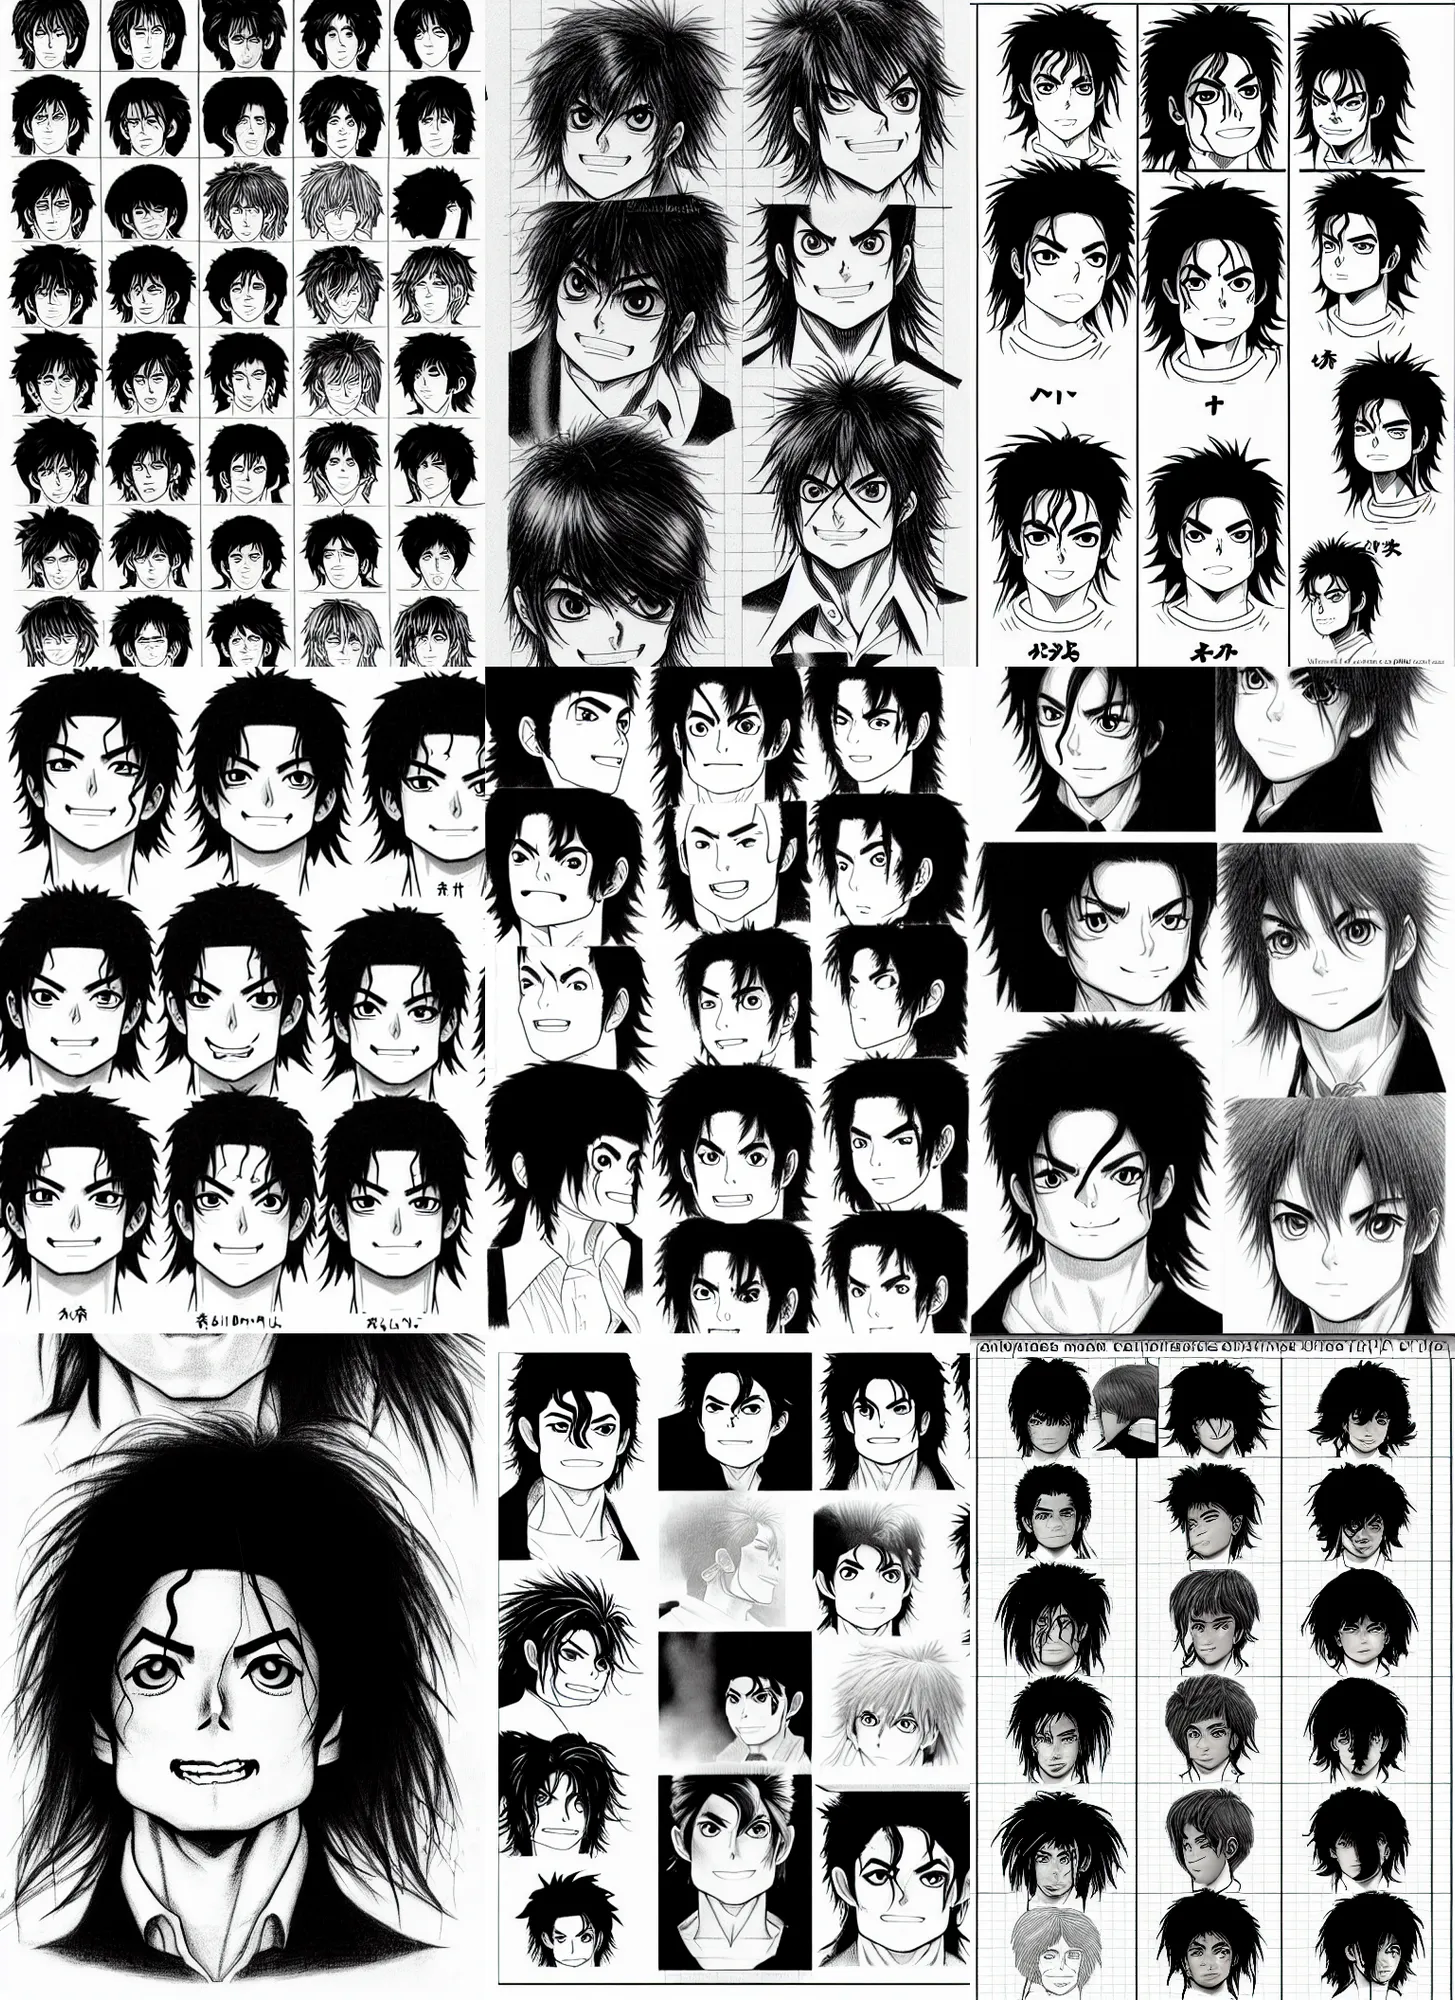 Prompt: pencil manga michael jackson head portrait manga emotion chart